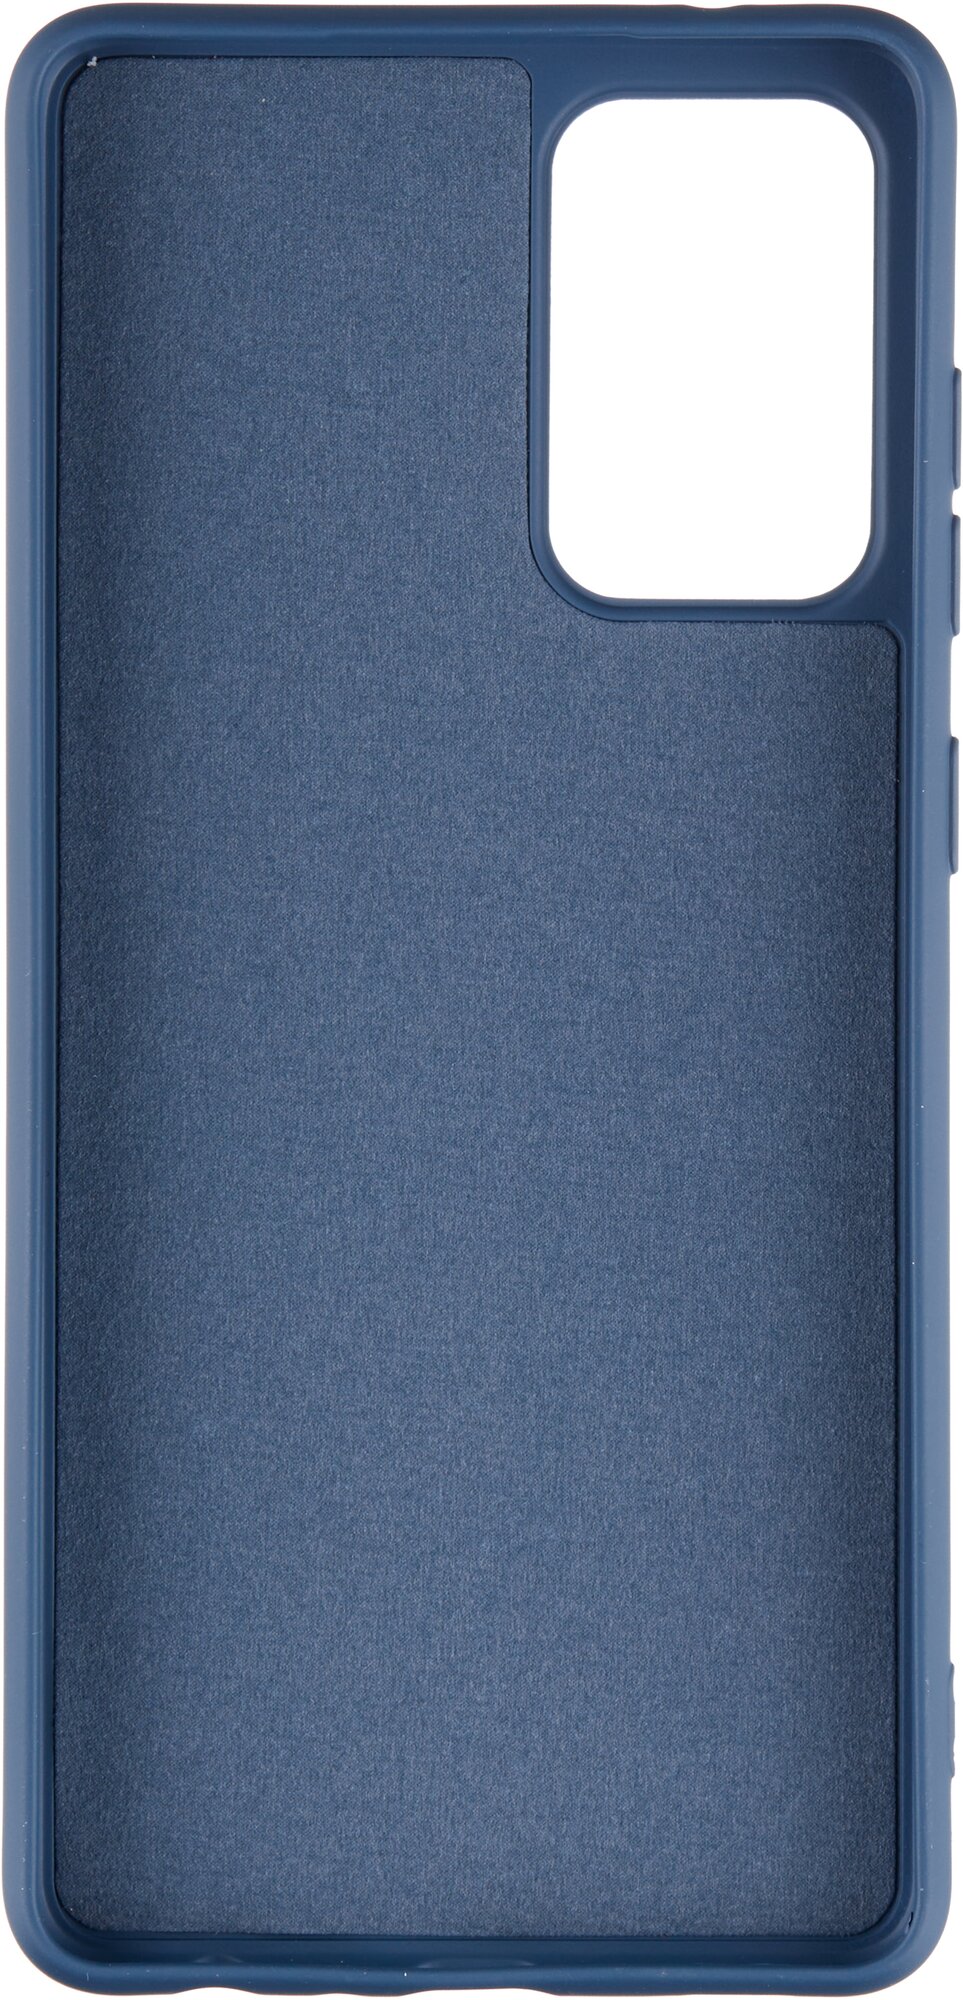 Чехол накладка Deppa Soft Silicone для Samsung Galaxy A72 (2021), синий, PET синий - фото №2